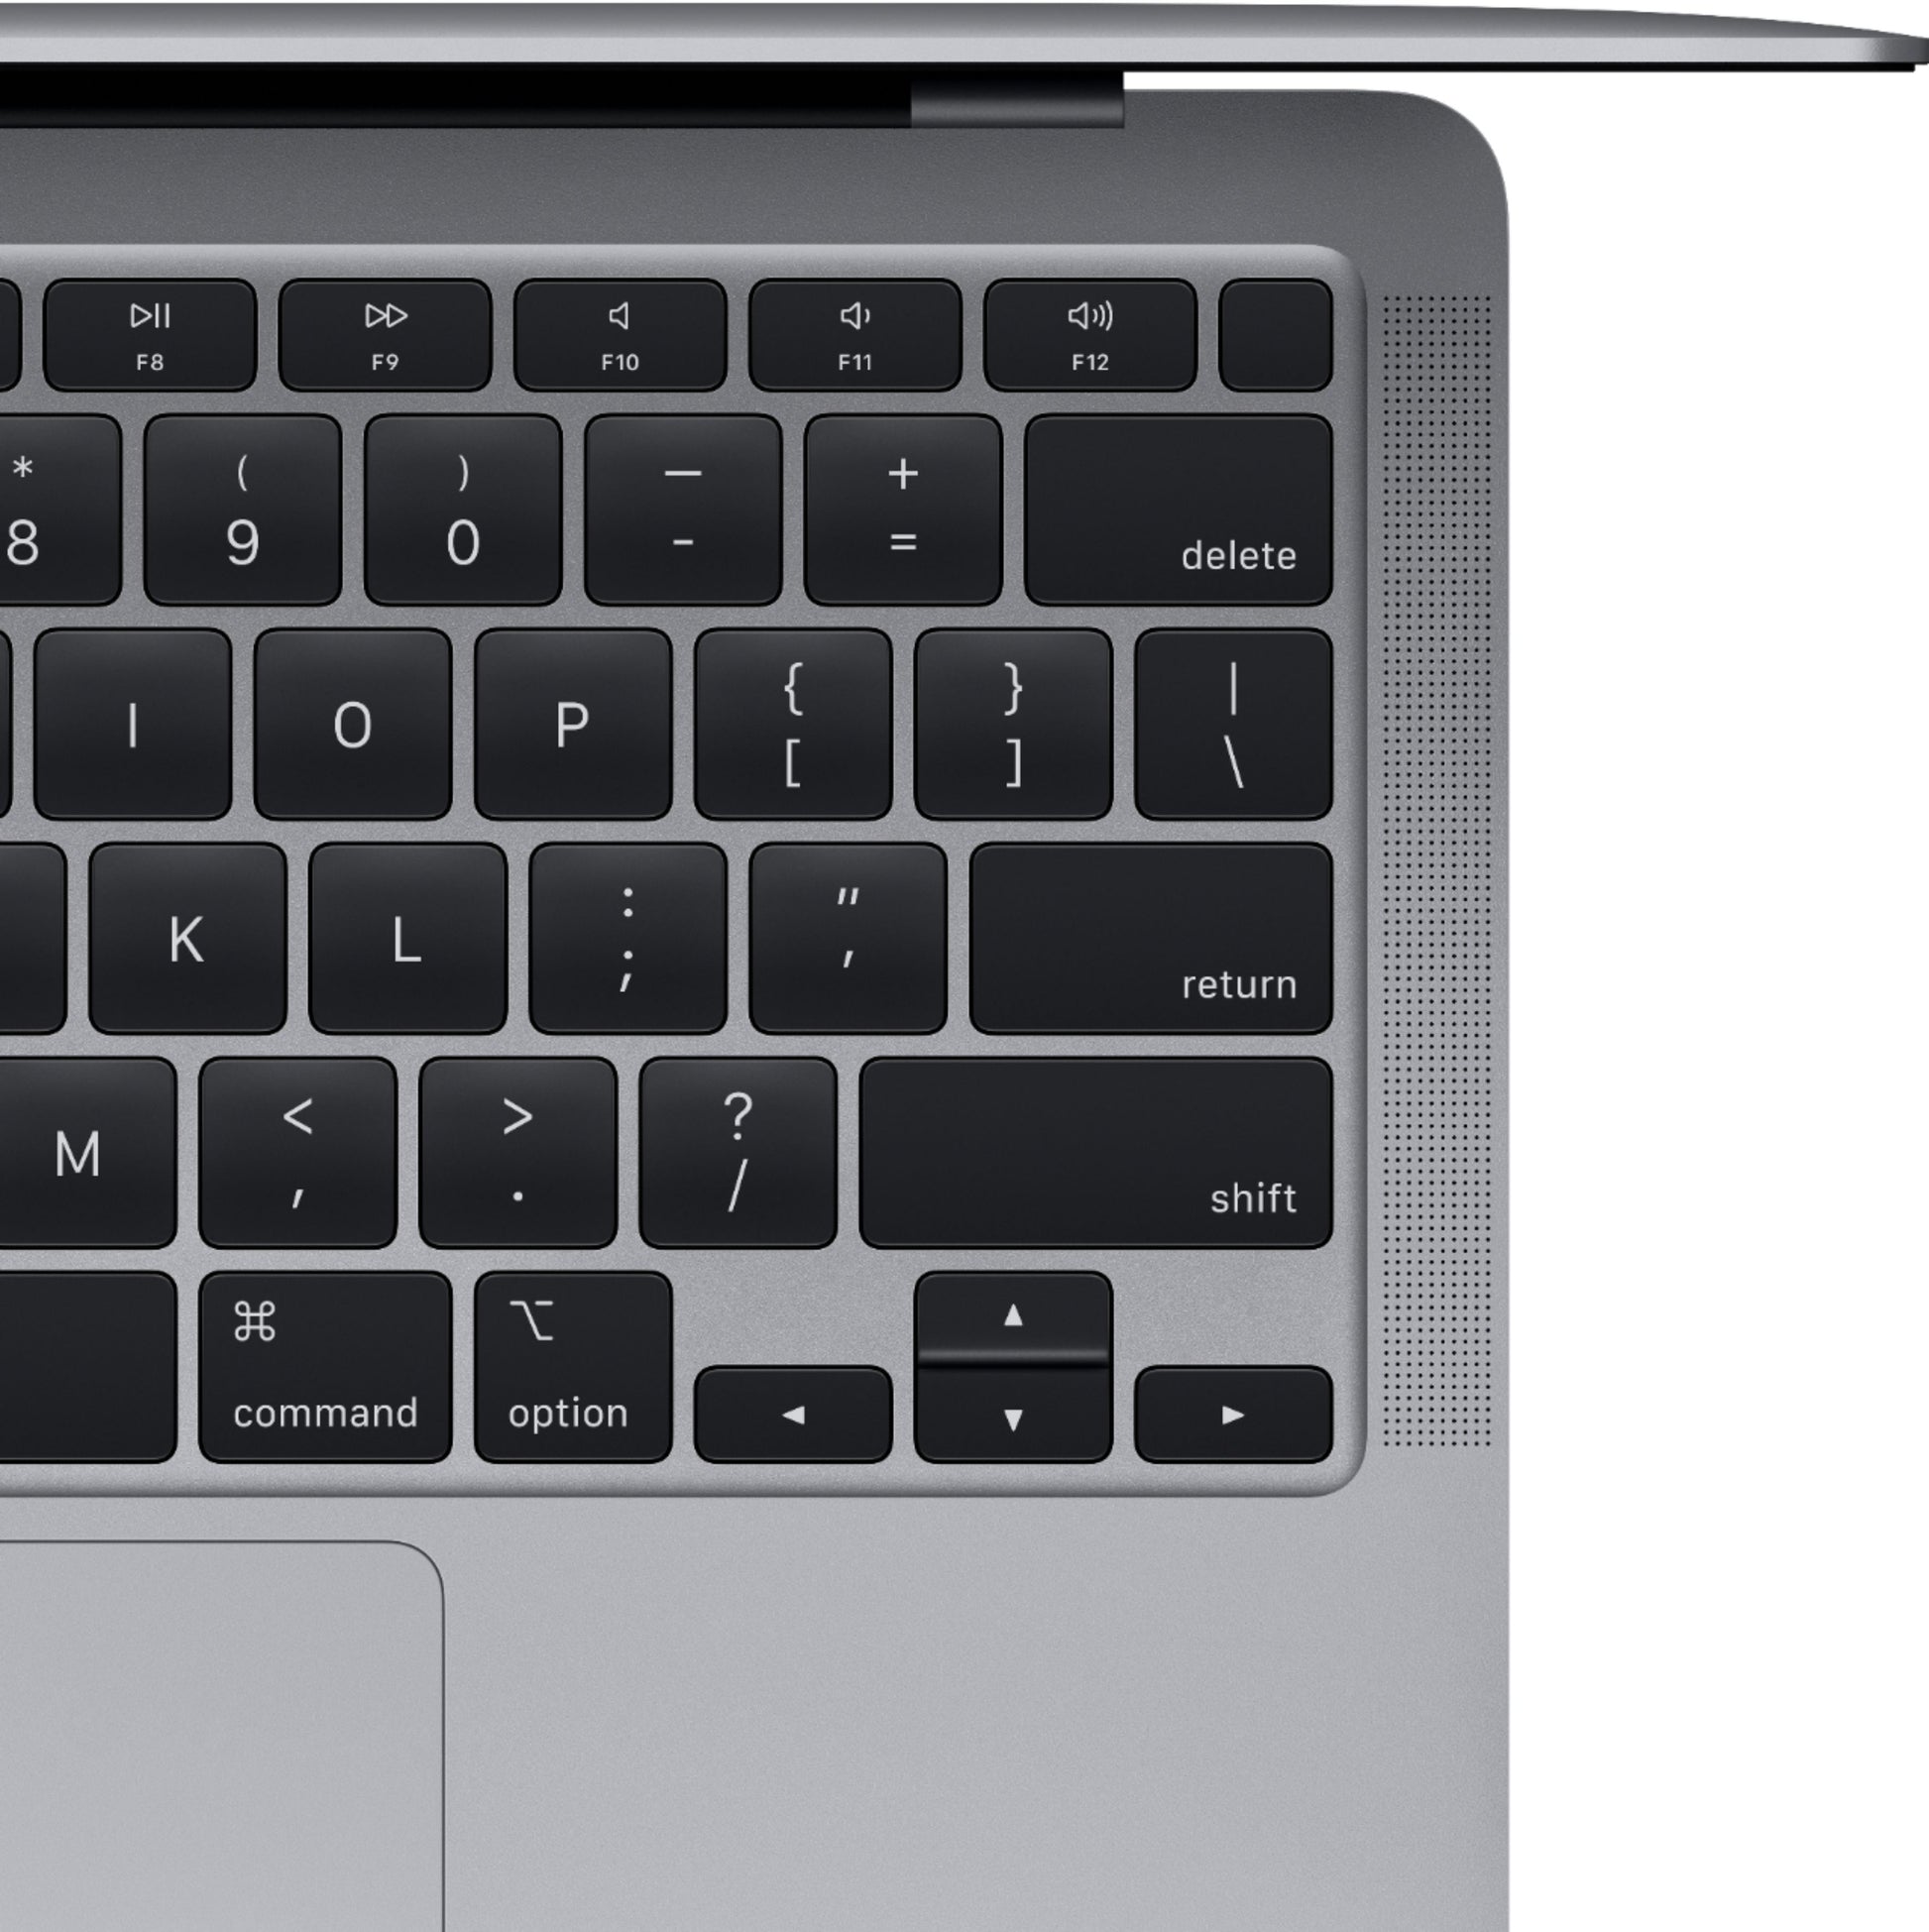 SALE~ New MacBook Air-2020 M1 Chip-256GB – SimpleTronics LLC